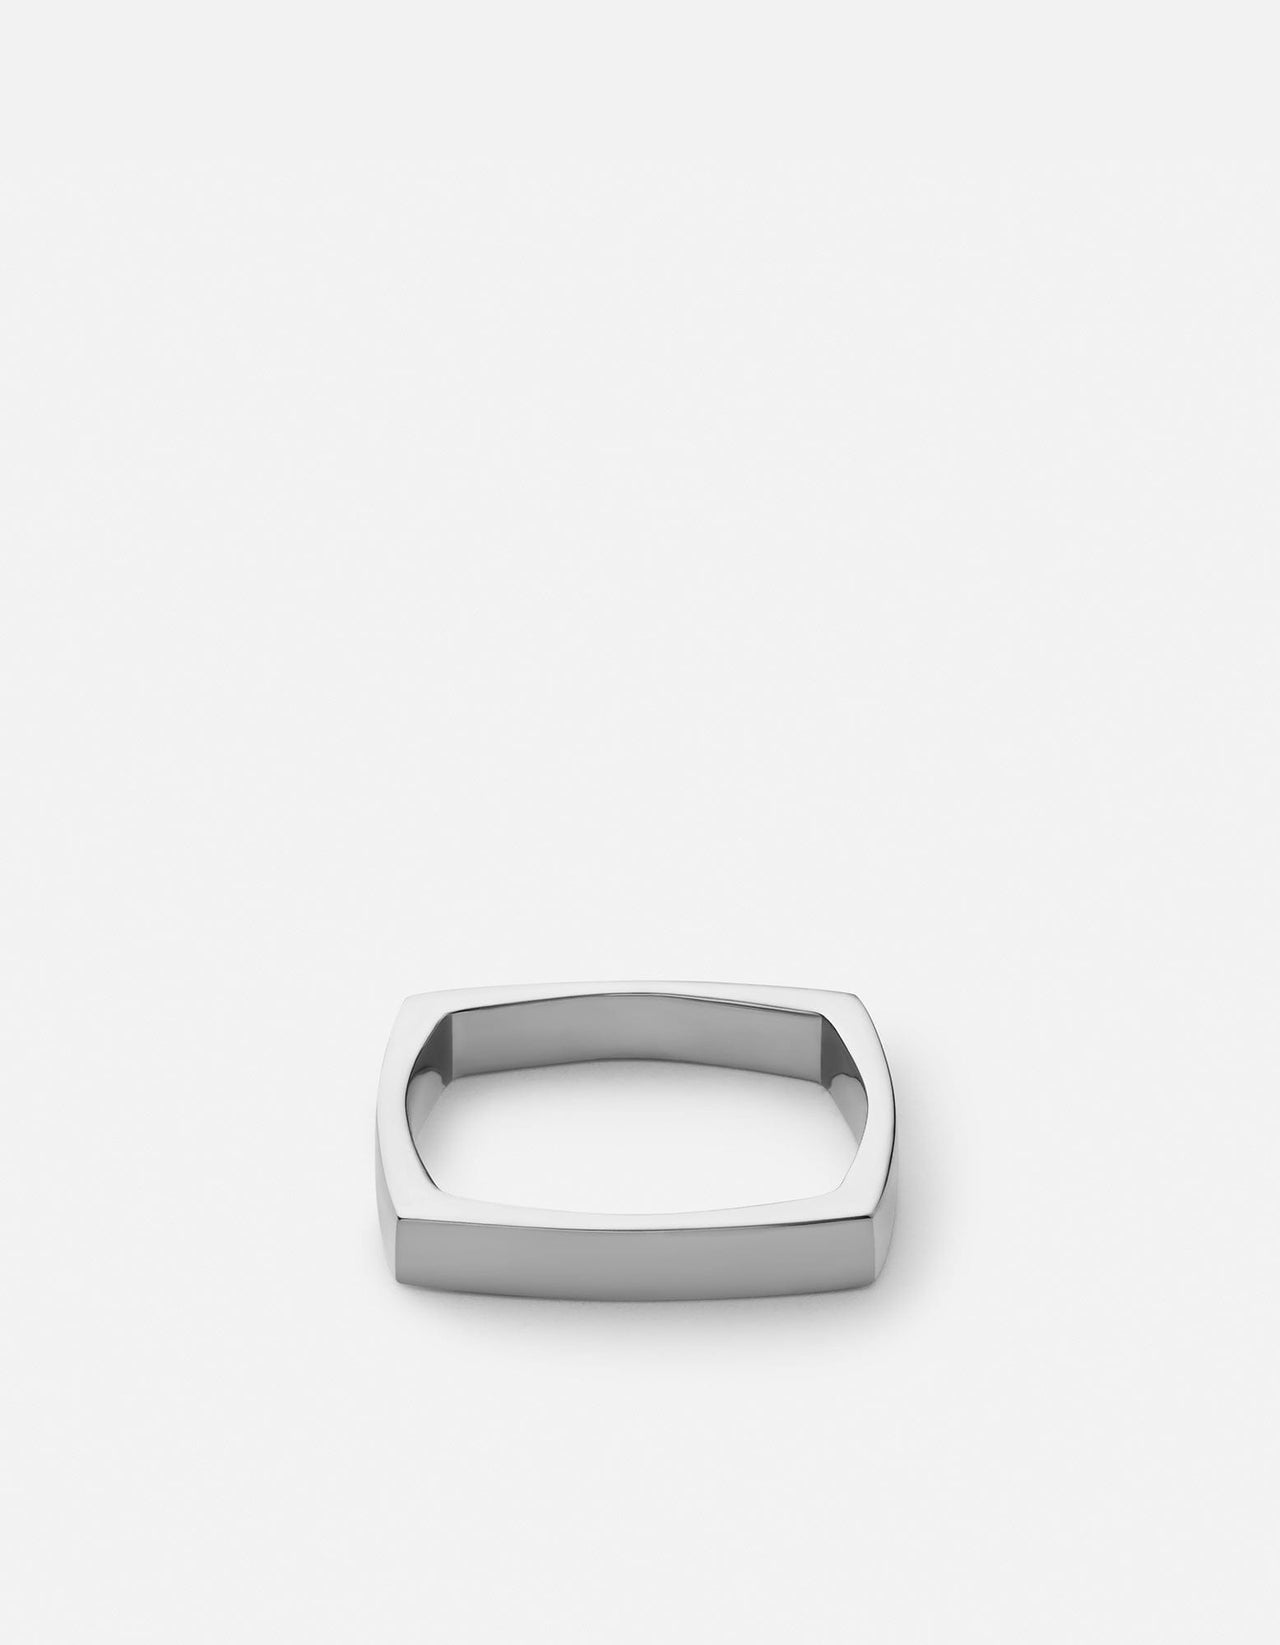 Streamline Pinky Ring in Sterling Silver, 13mm | David Yurman